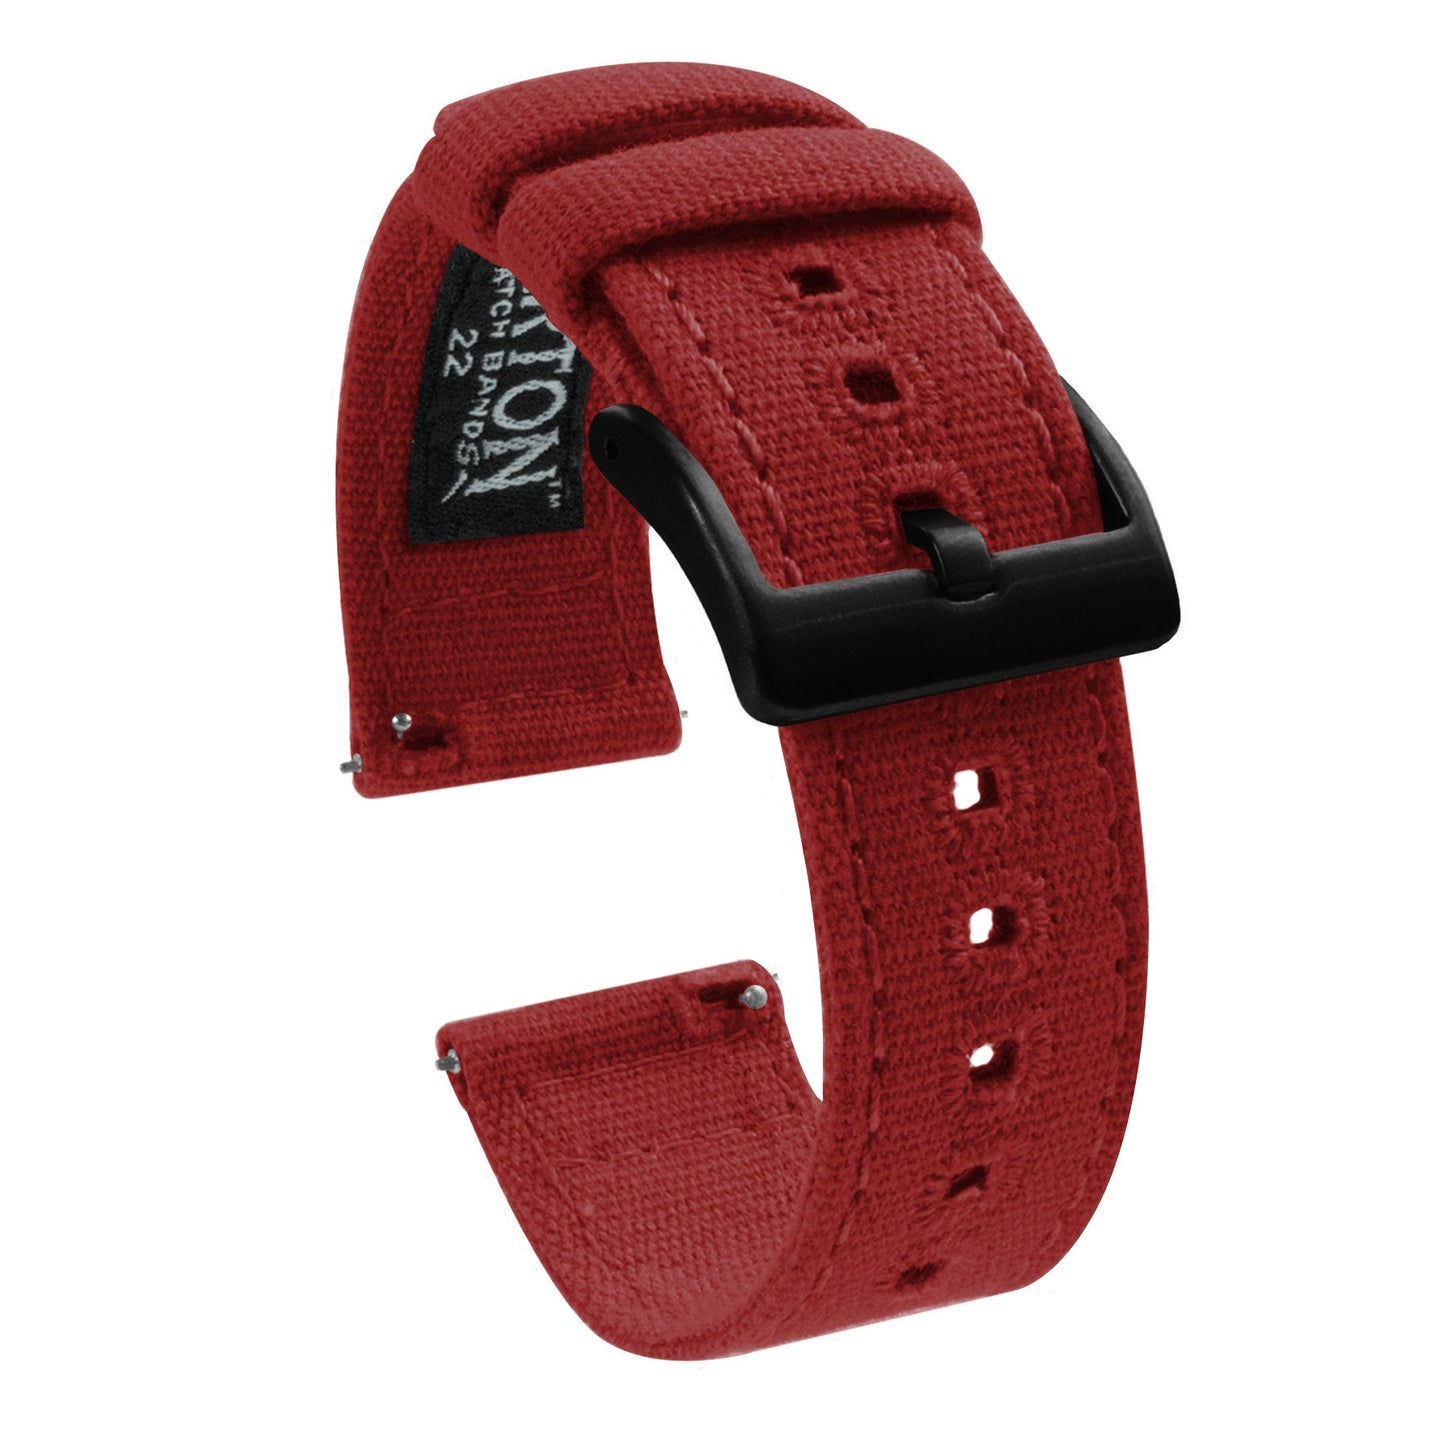 Crimson Red Premium Canvas Watch Band by Barton Watch Bands